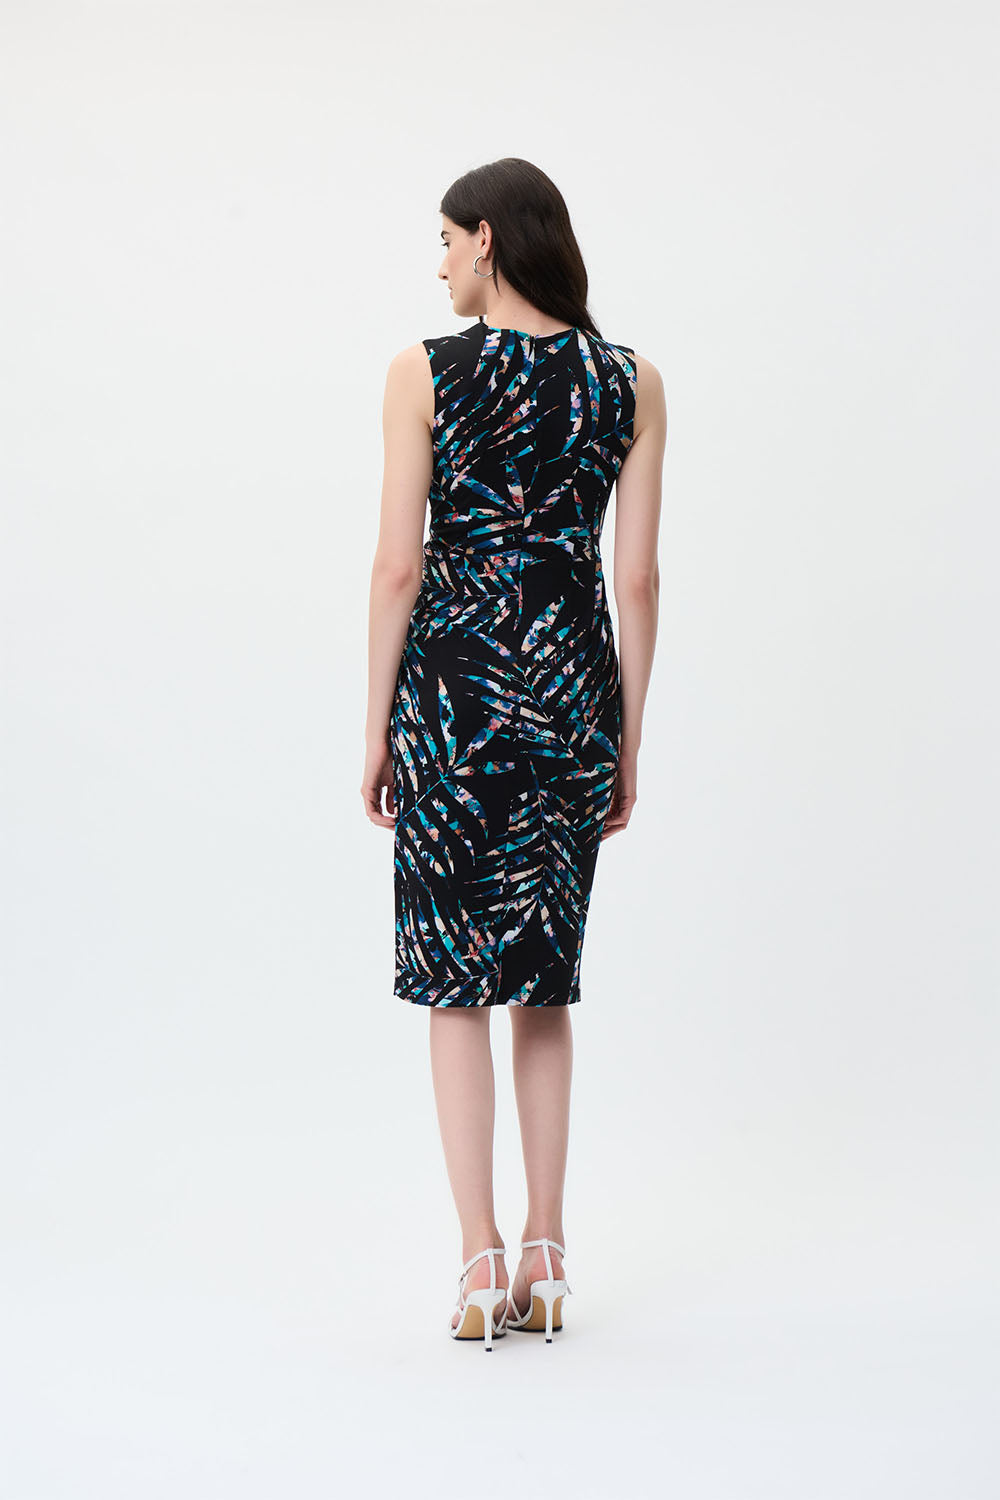 Joseph Ribkoff S/Less Print Dress Jr231108